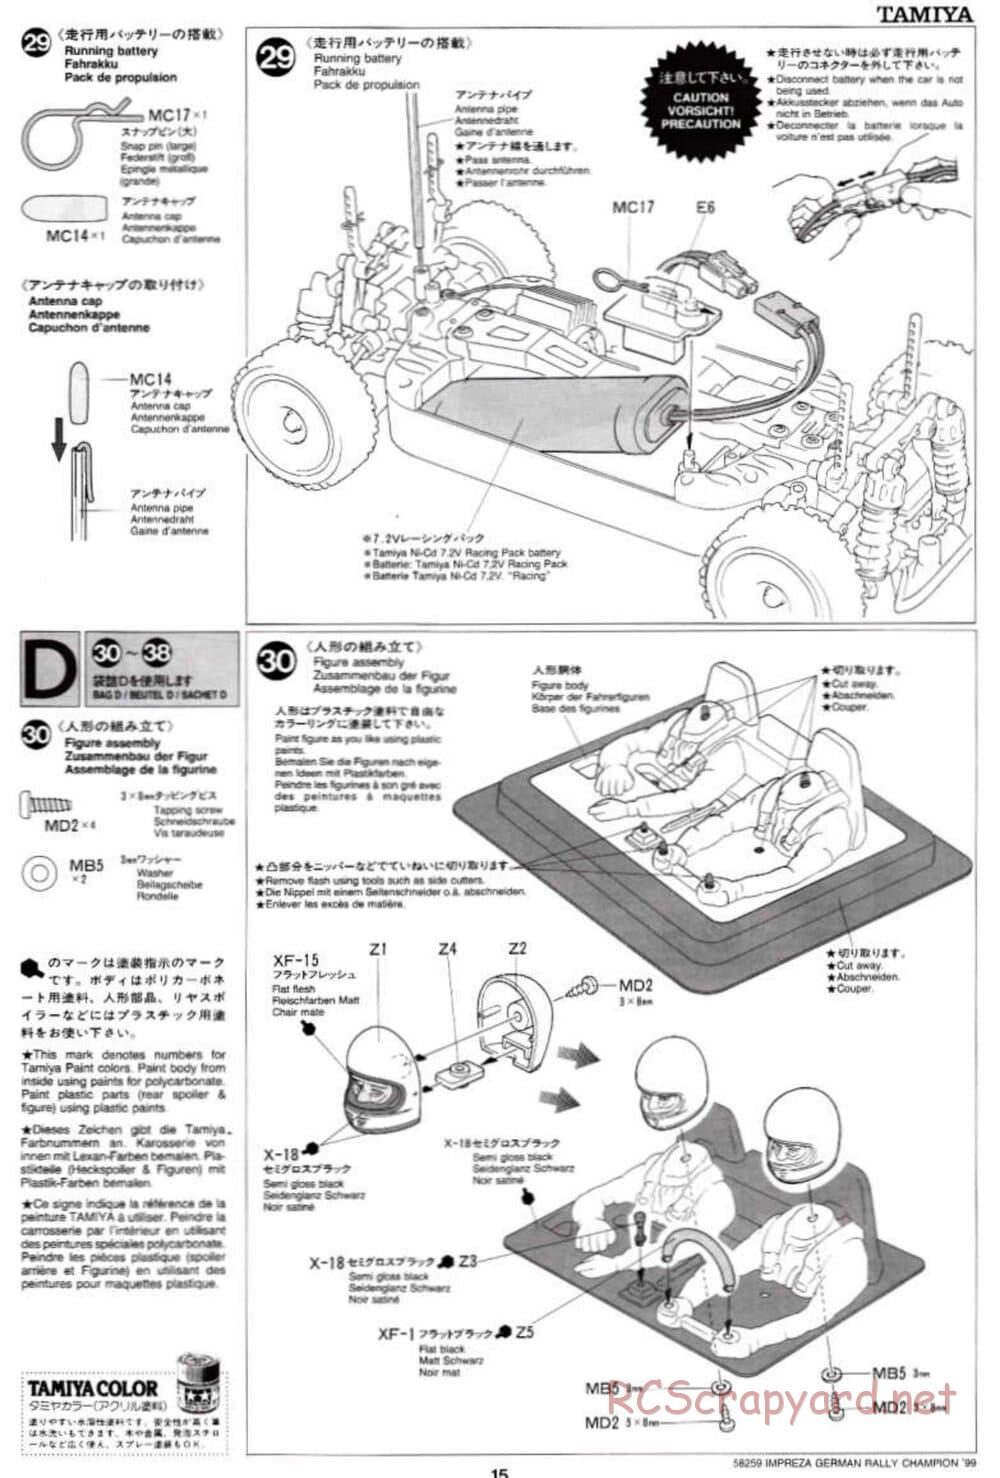 Tamiya - Subaru Impreza German Rally Champion 99 - TB-01 Chassis - Manual - Page 15